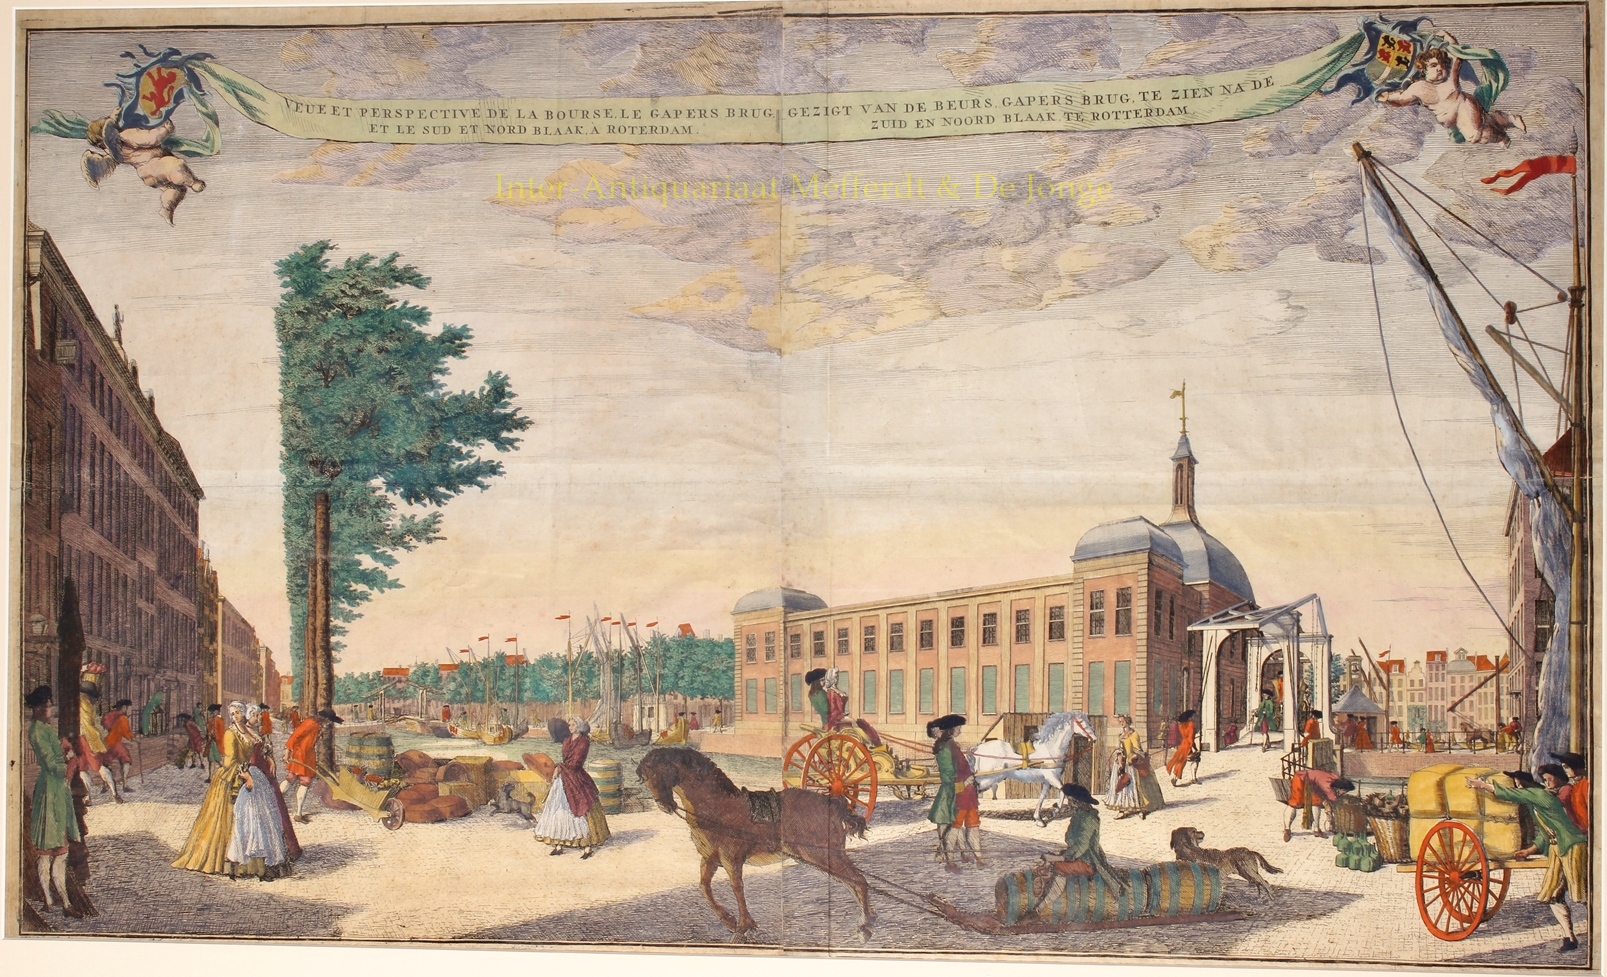  - Old exchange of Rotterdam - Jacob Lindenberg, 1736-1740